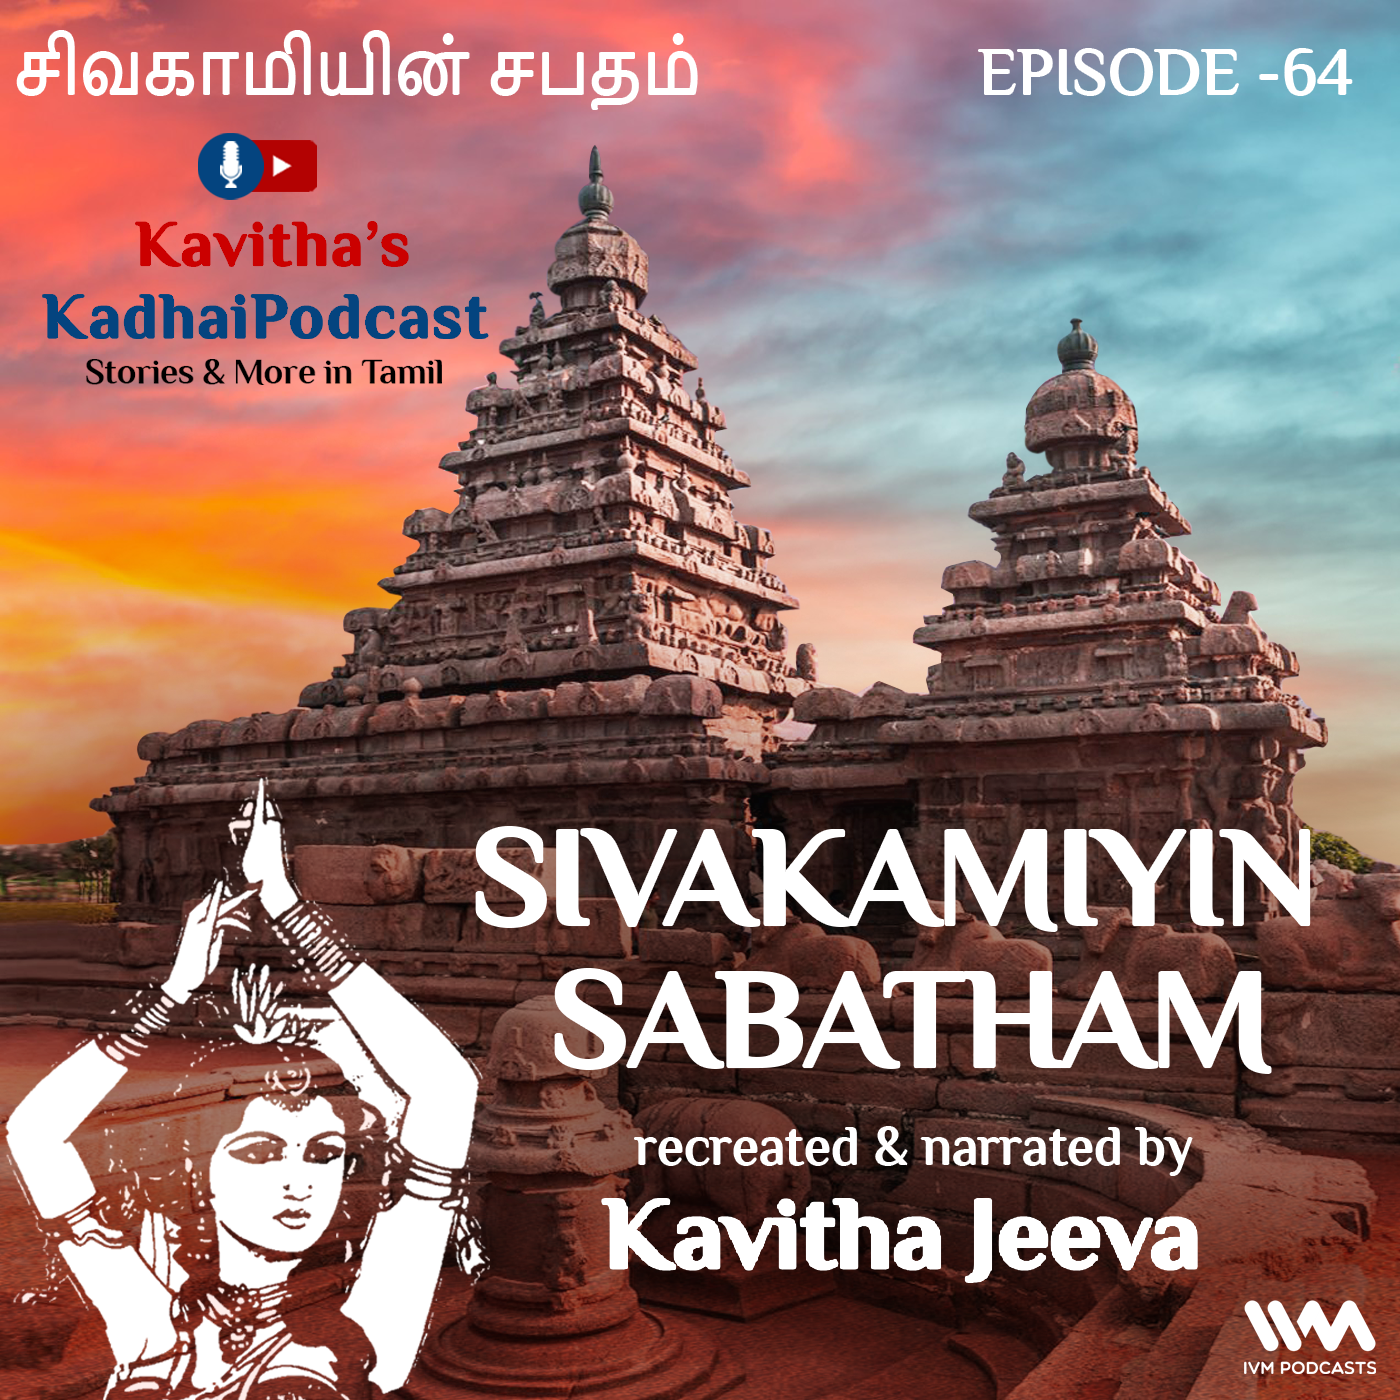 KadhaiPodcast's Sivakamiyin Sabatham - Episode # 64